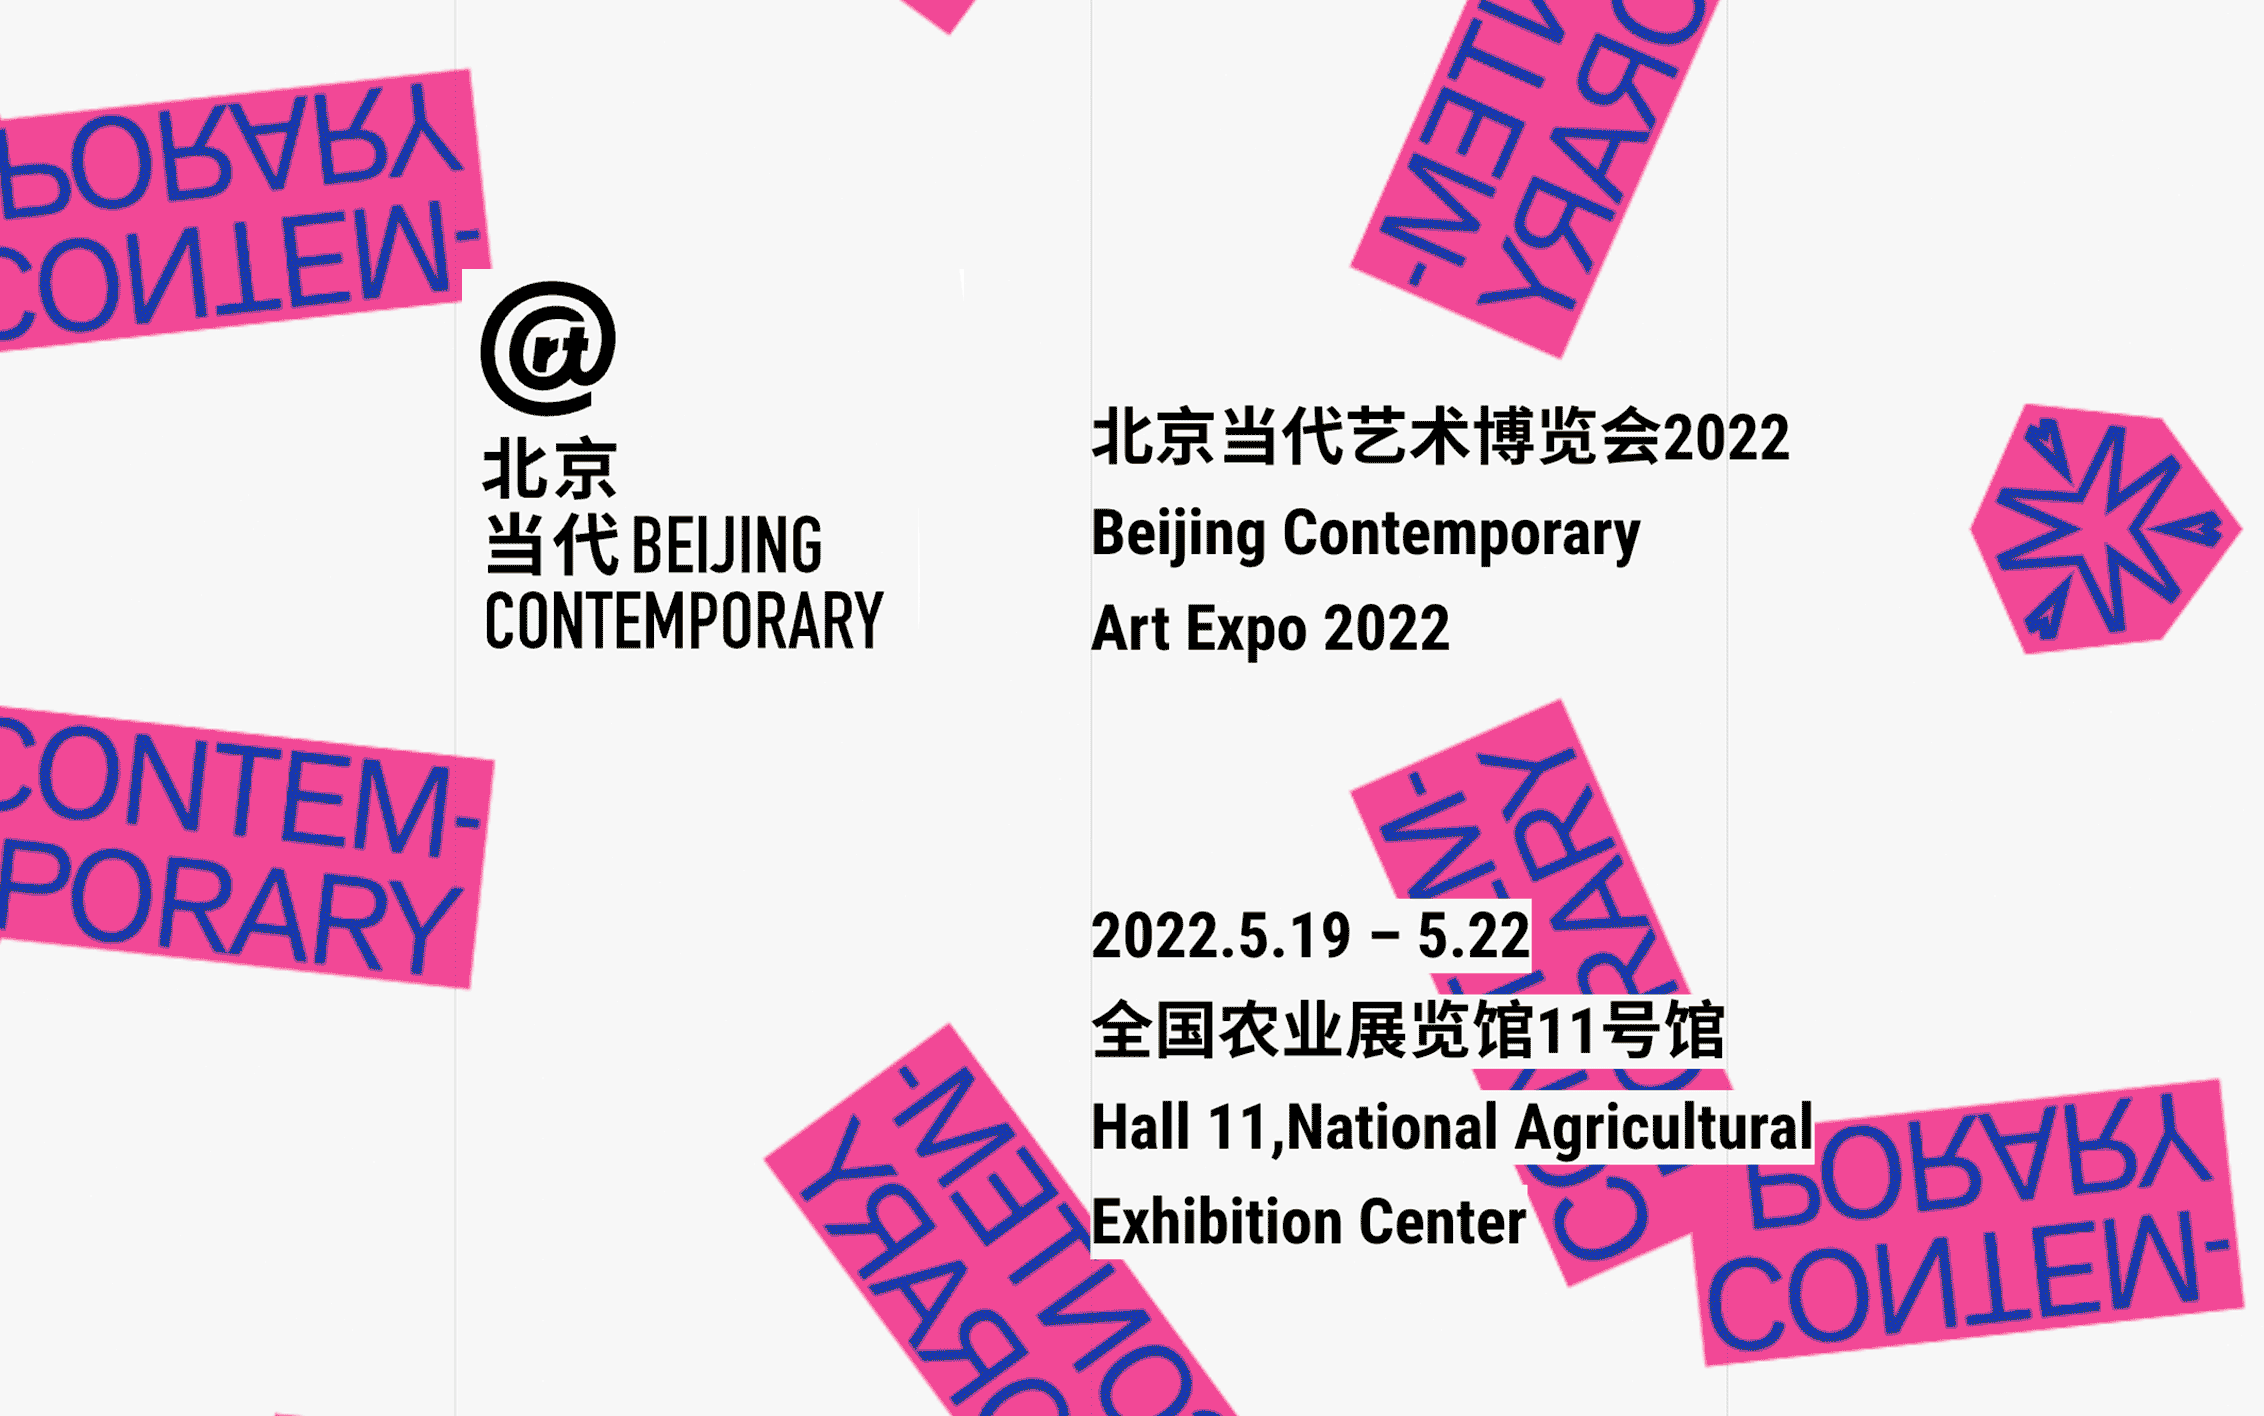 Contemporary art art fair, Beijing Contemporary Art Expo 2022 at A Thousand Plateaus Art Space, Chengdu, China